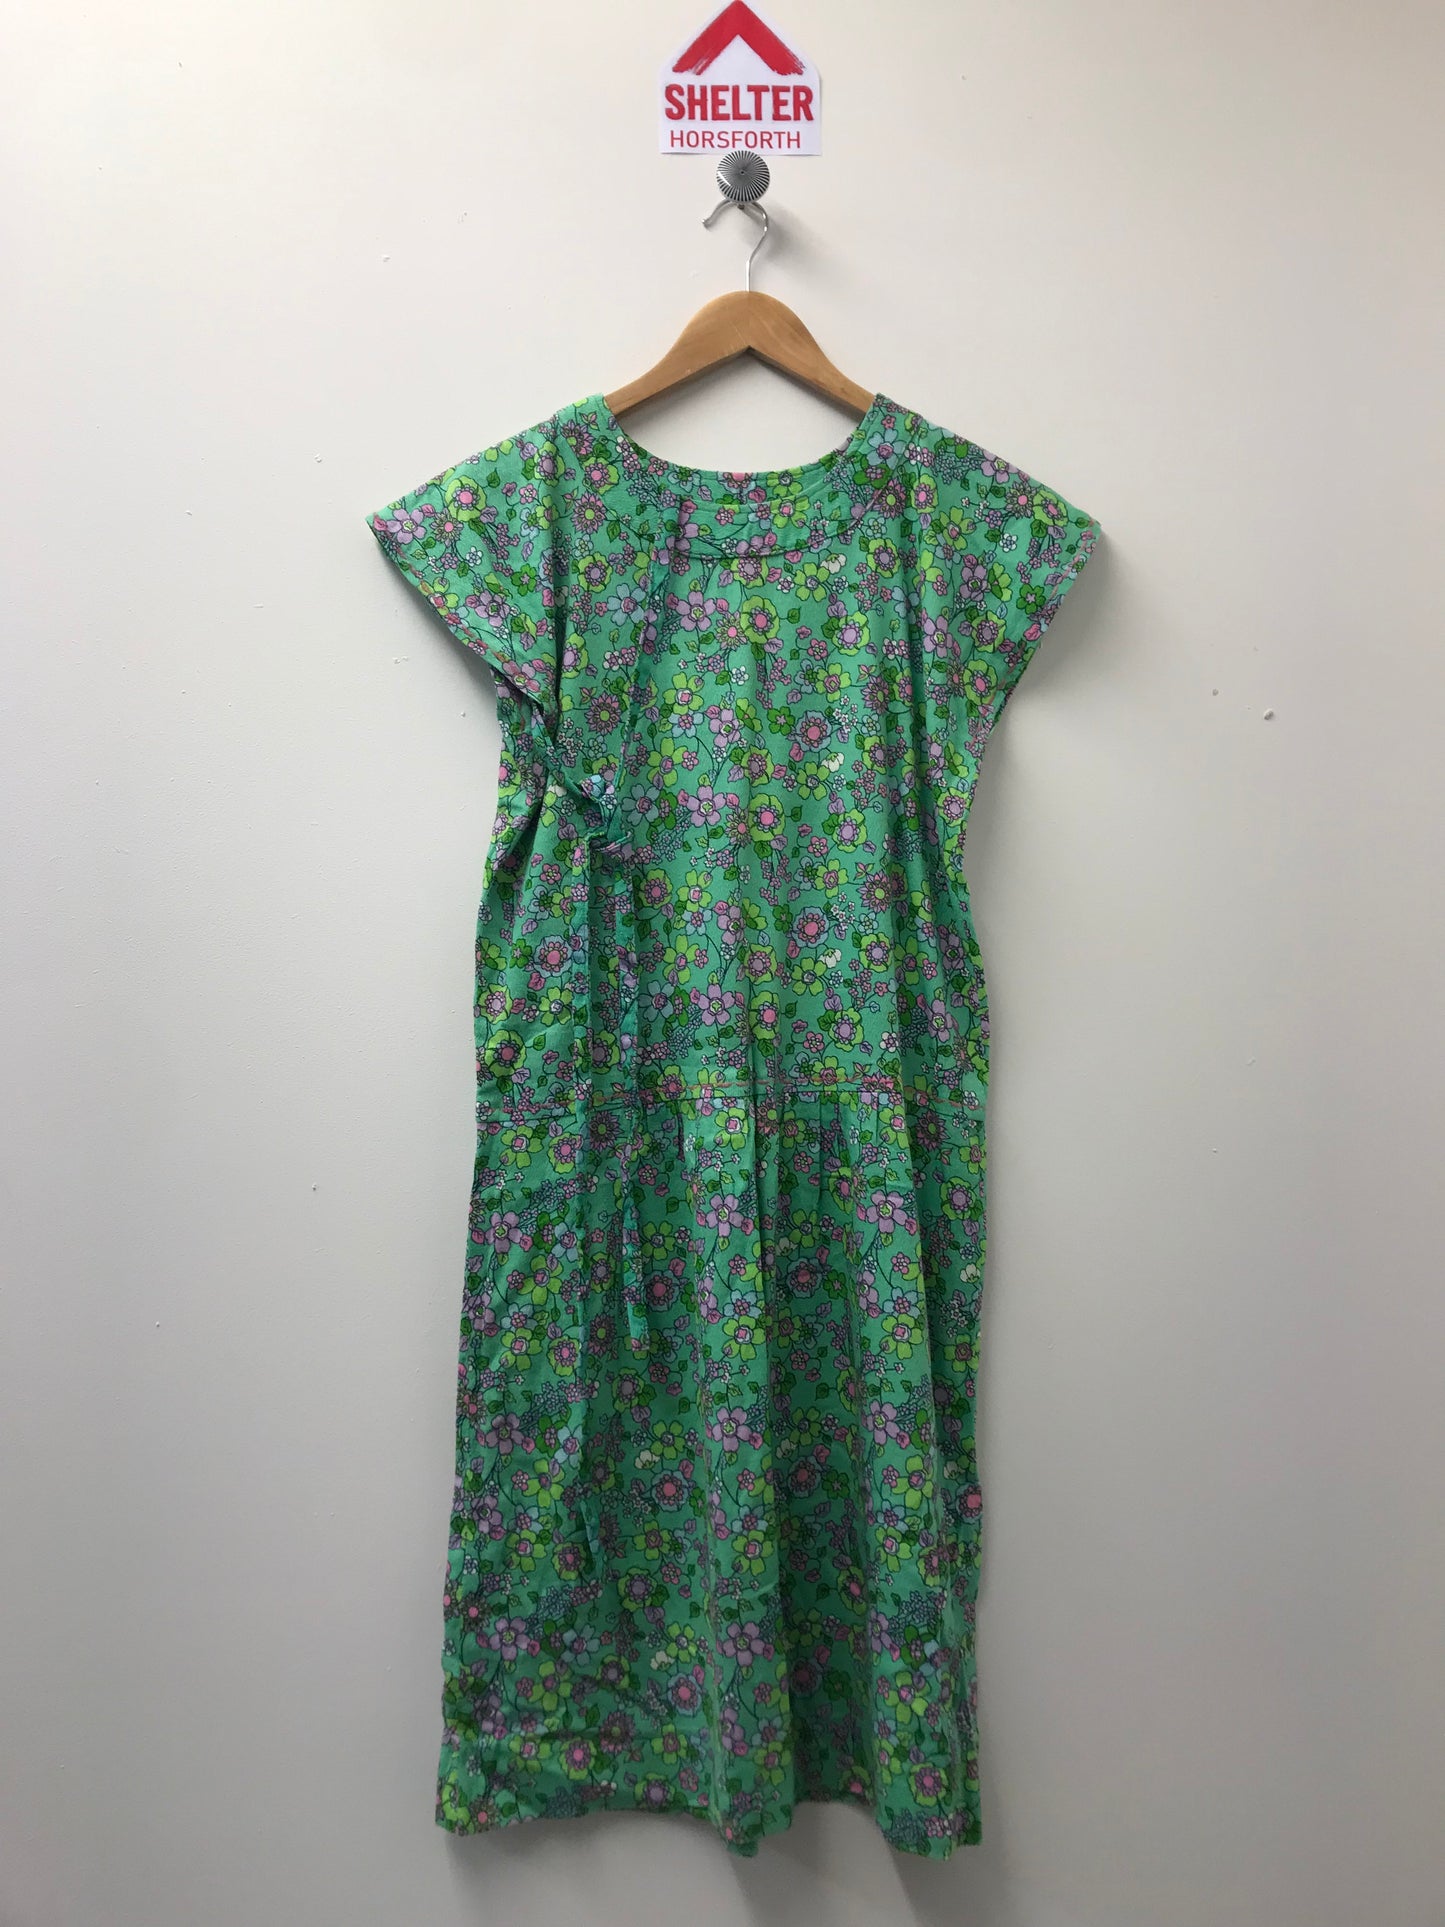 Vintage Green Floral Dress Size Medium